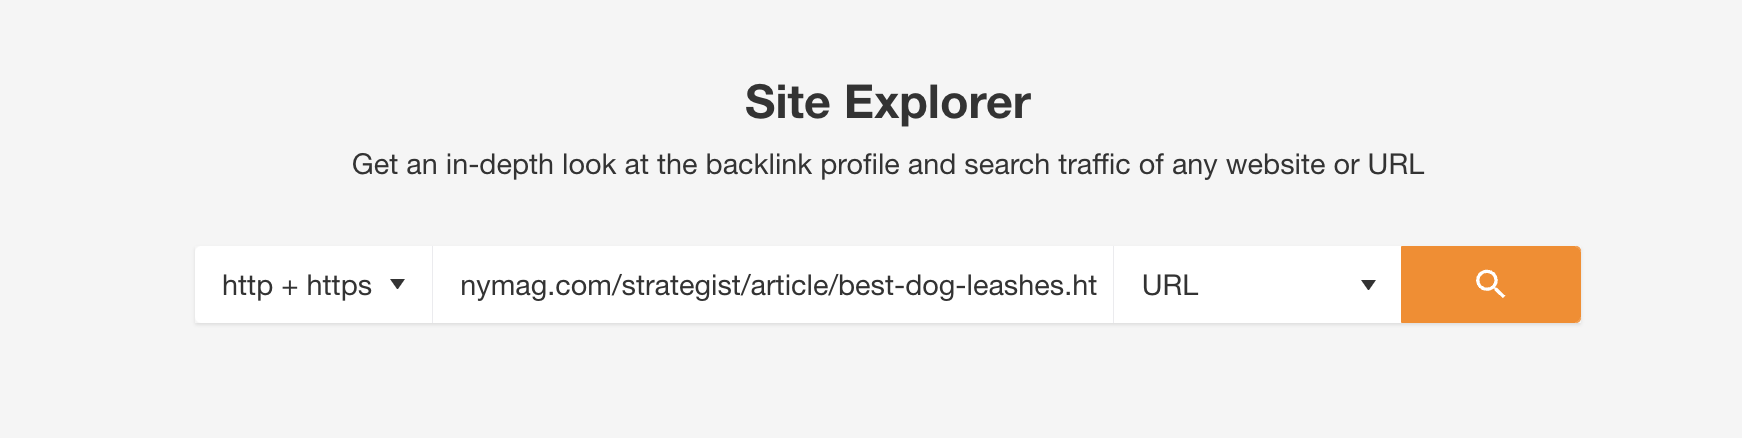 site explorer screenshot